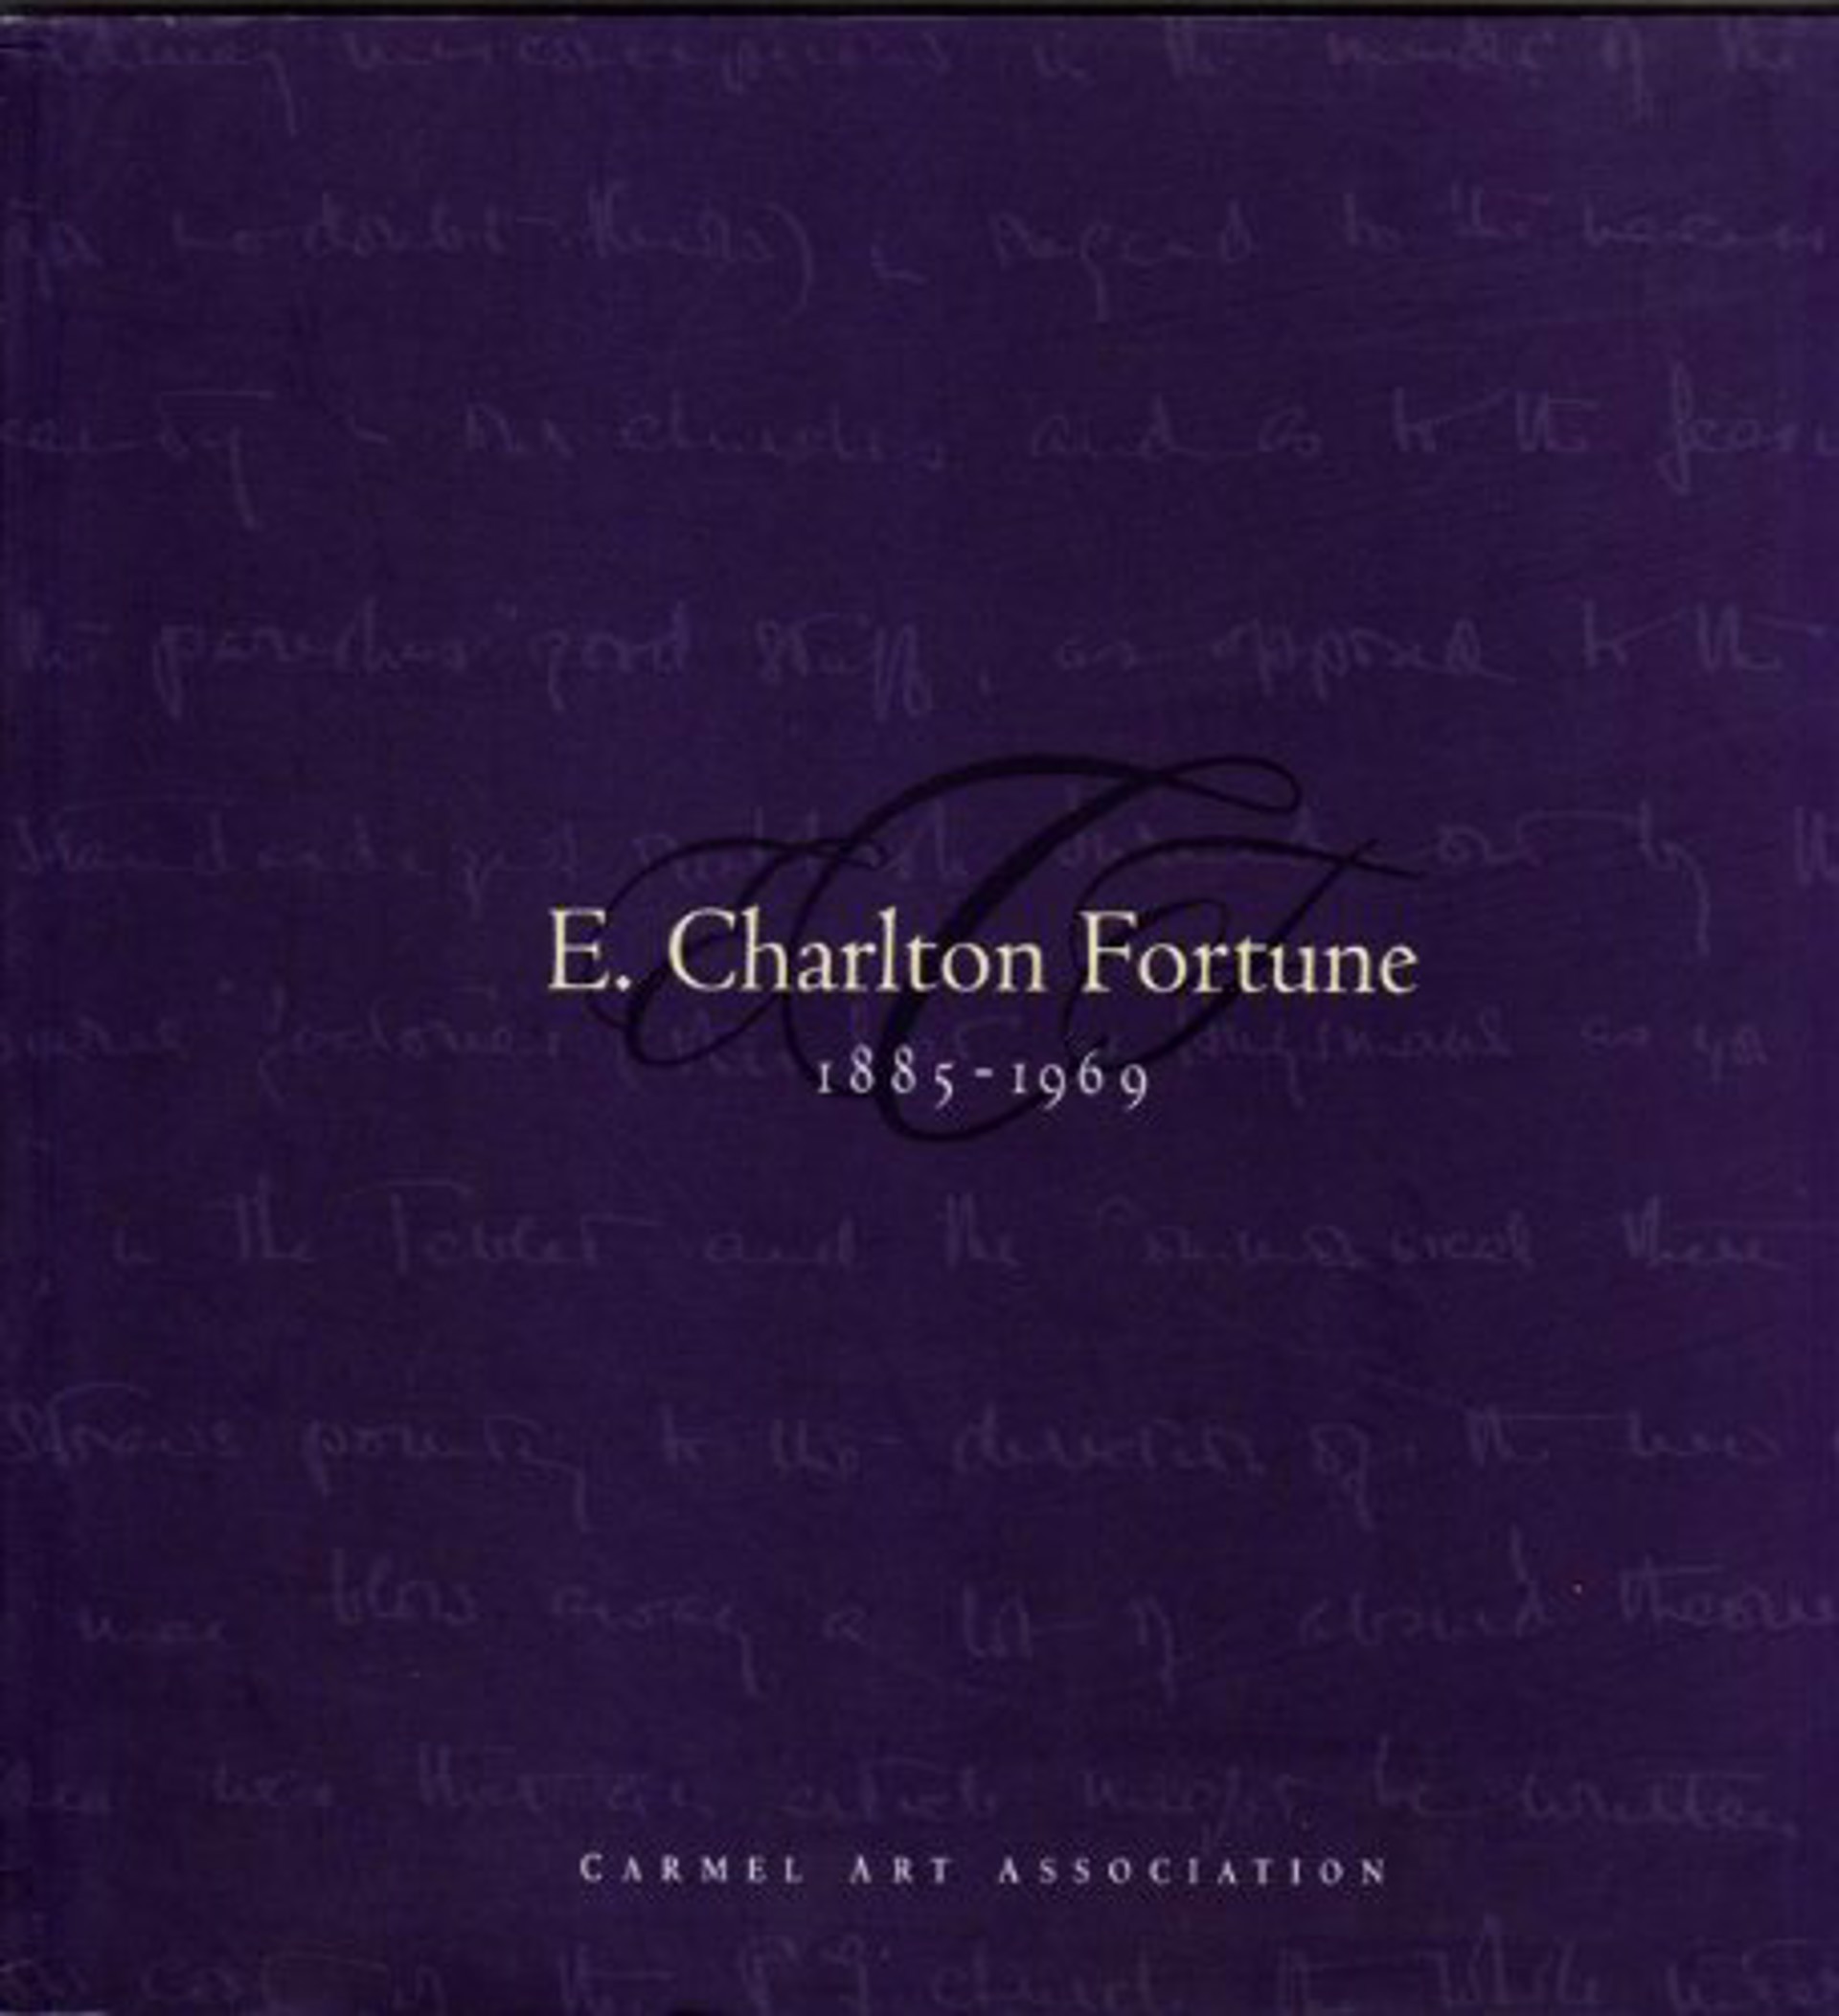 E. Charleton Fortune: 1885-1969 by CAA Carmel Art Association